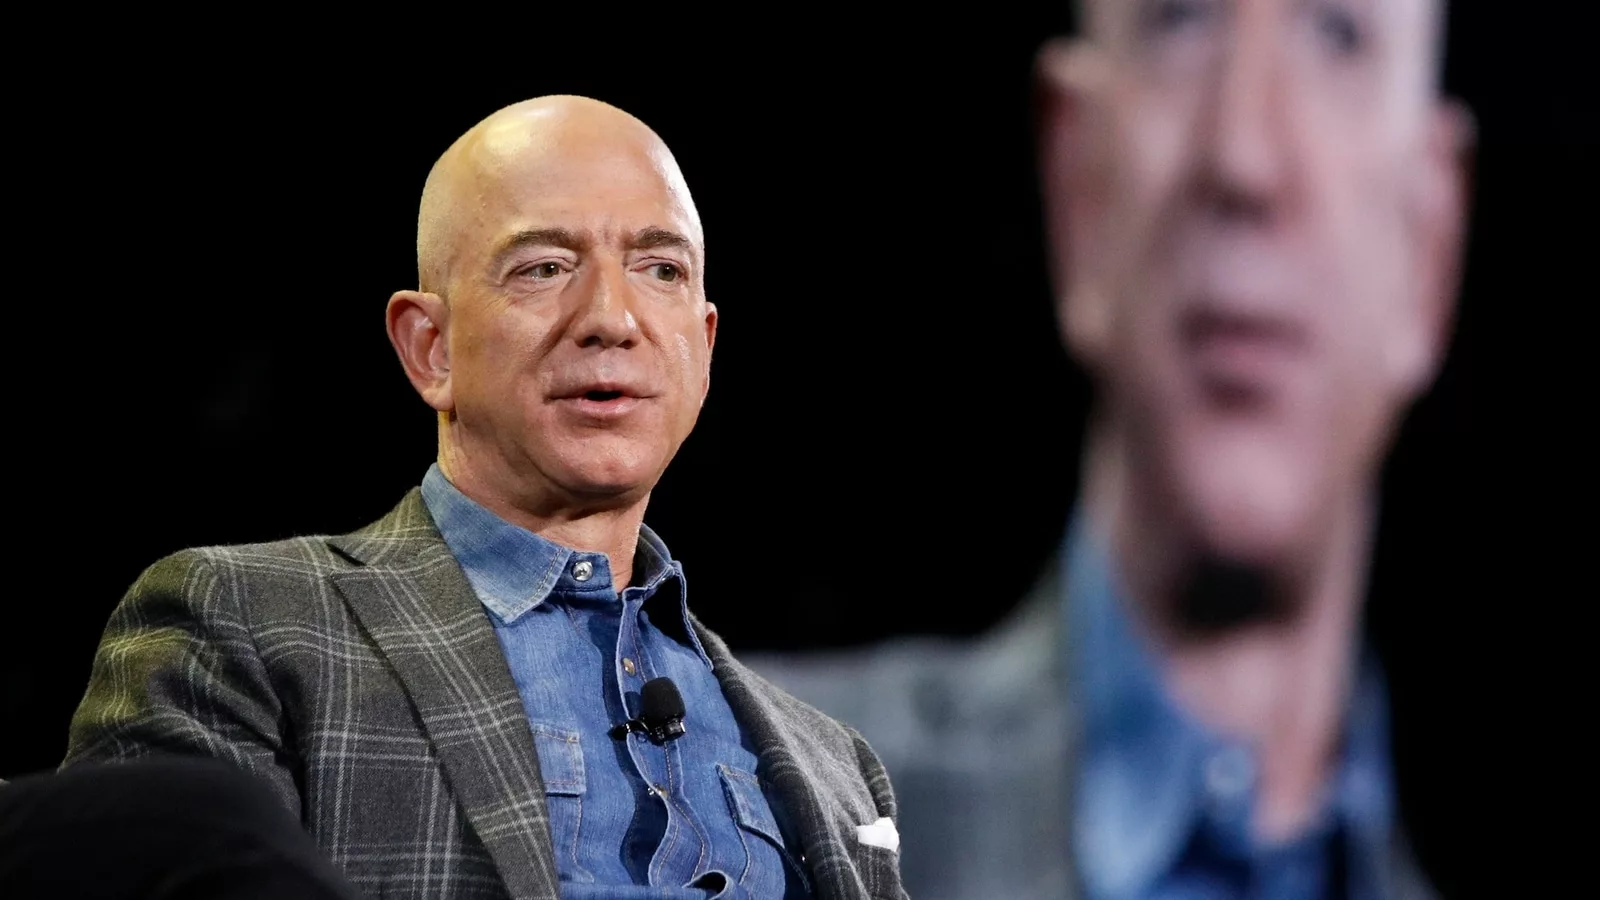 Jeff Bezos unloads Amazon shares worth ₹16,604 crore in latest stock dump